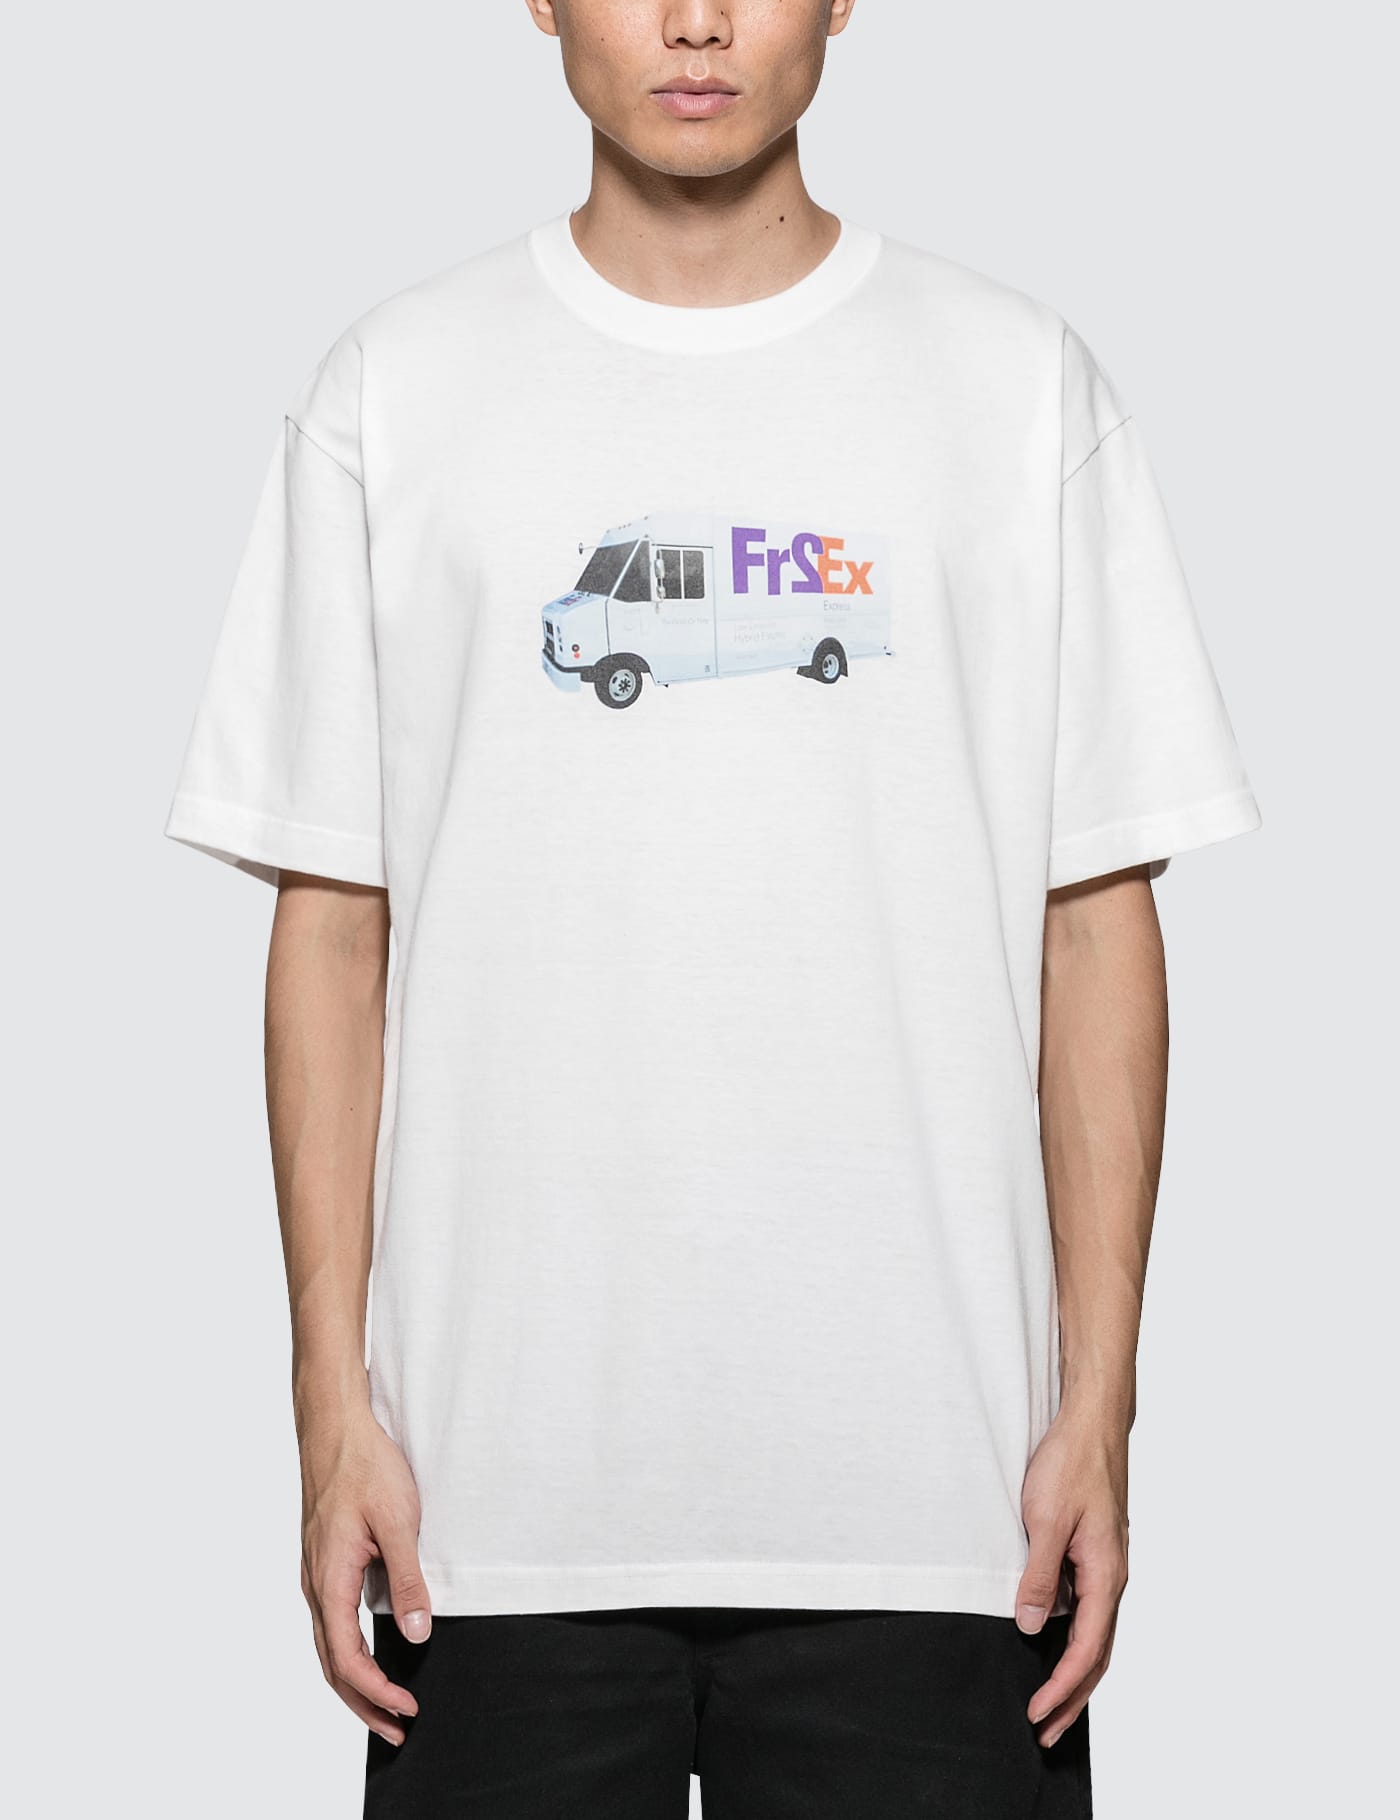 FR2 - Fr2ex S/S T-Shirt | HBX - ハイプビースト(Hypebeast)が厳選